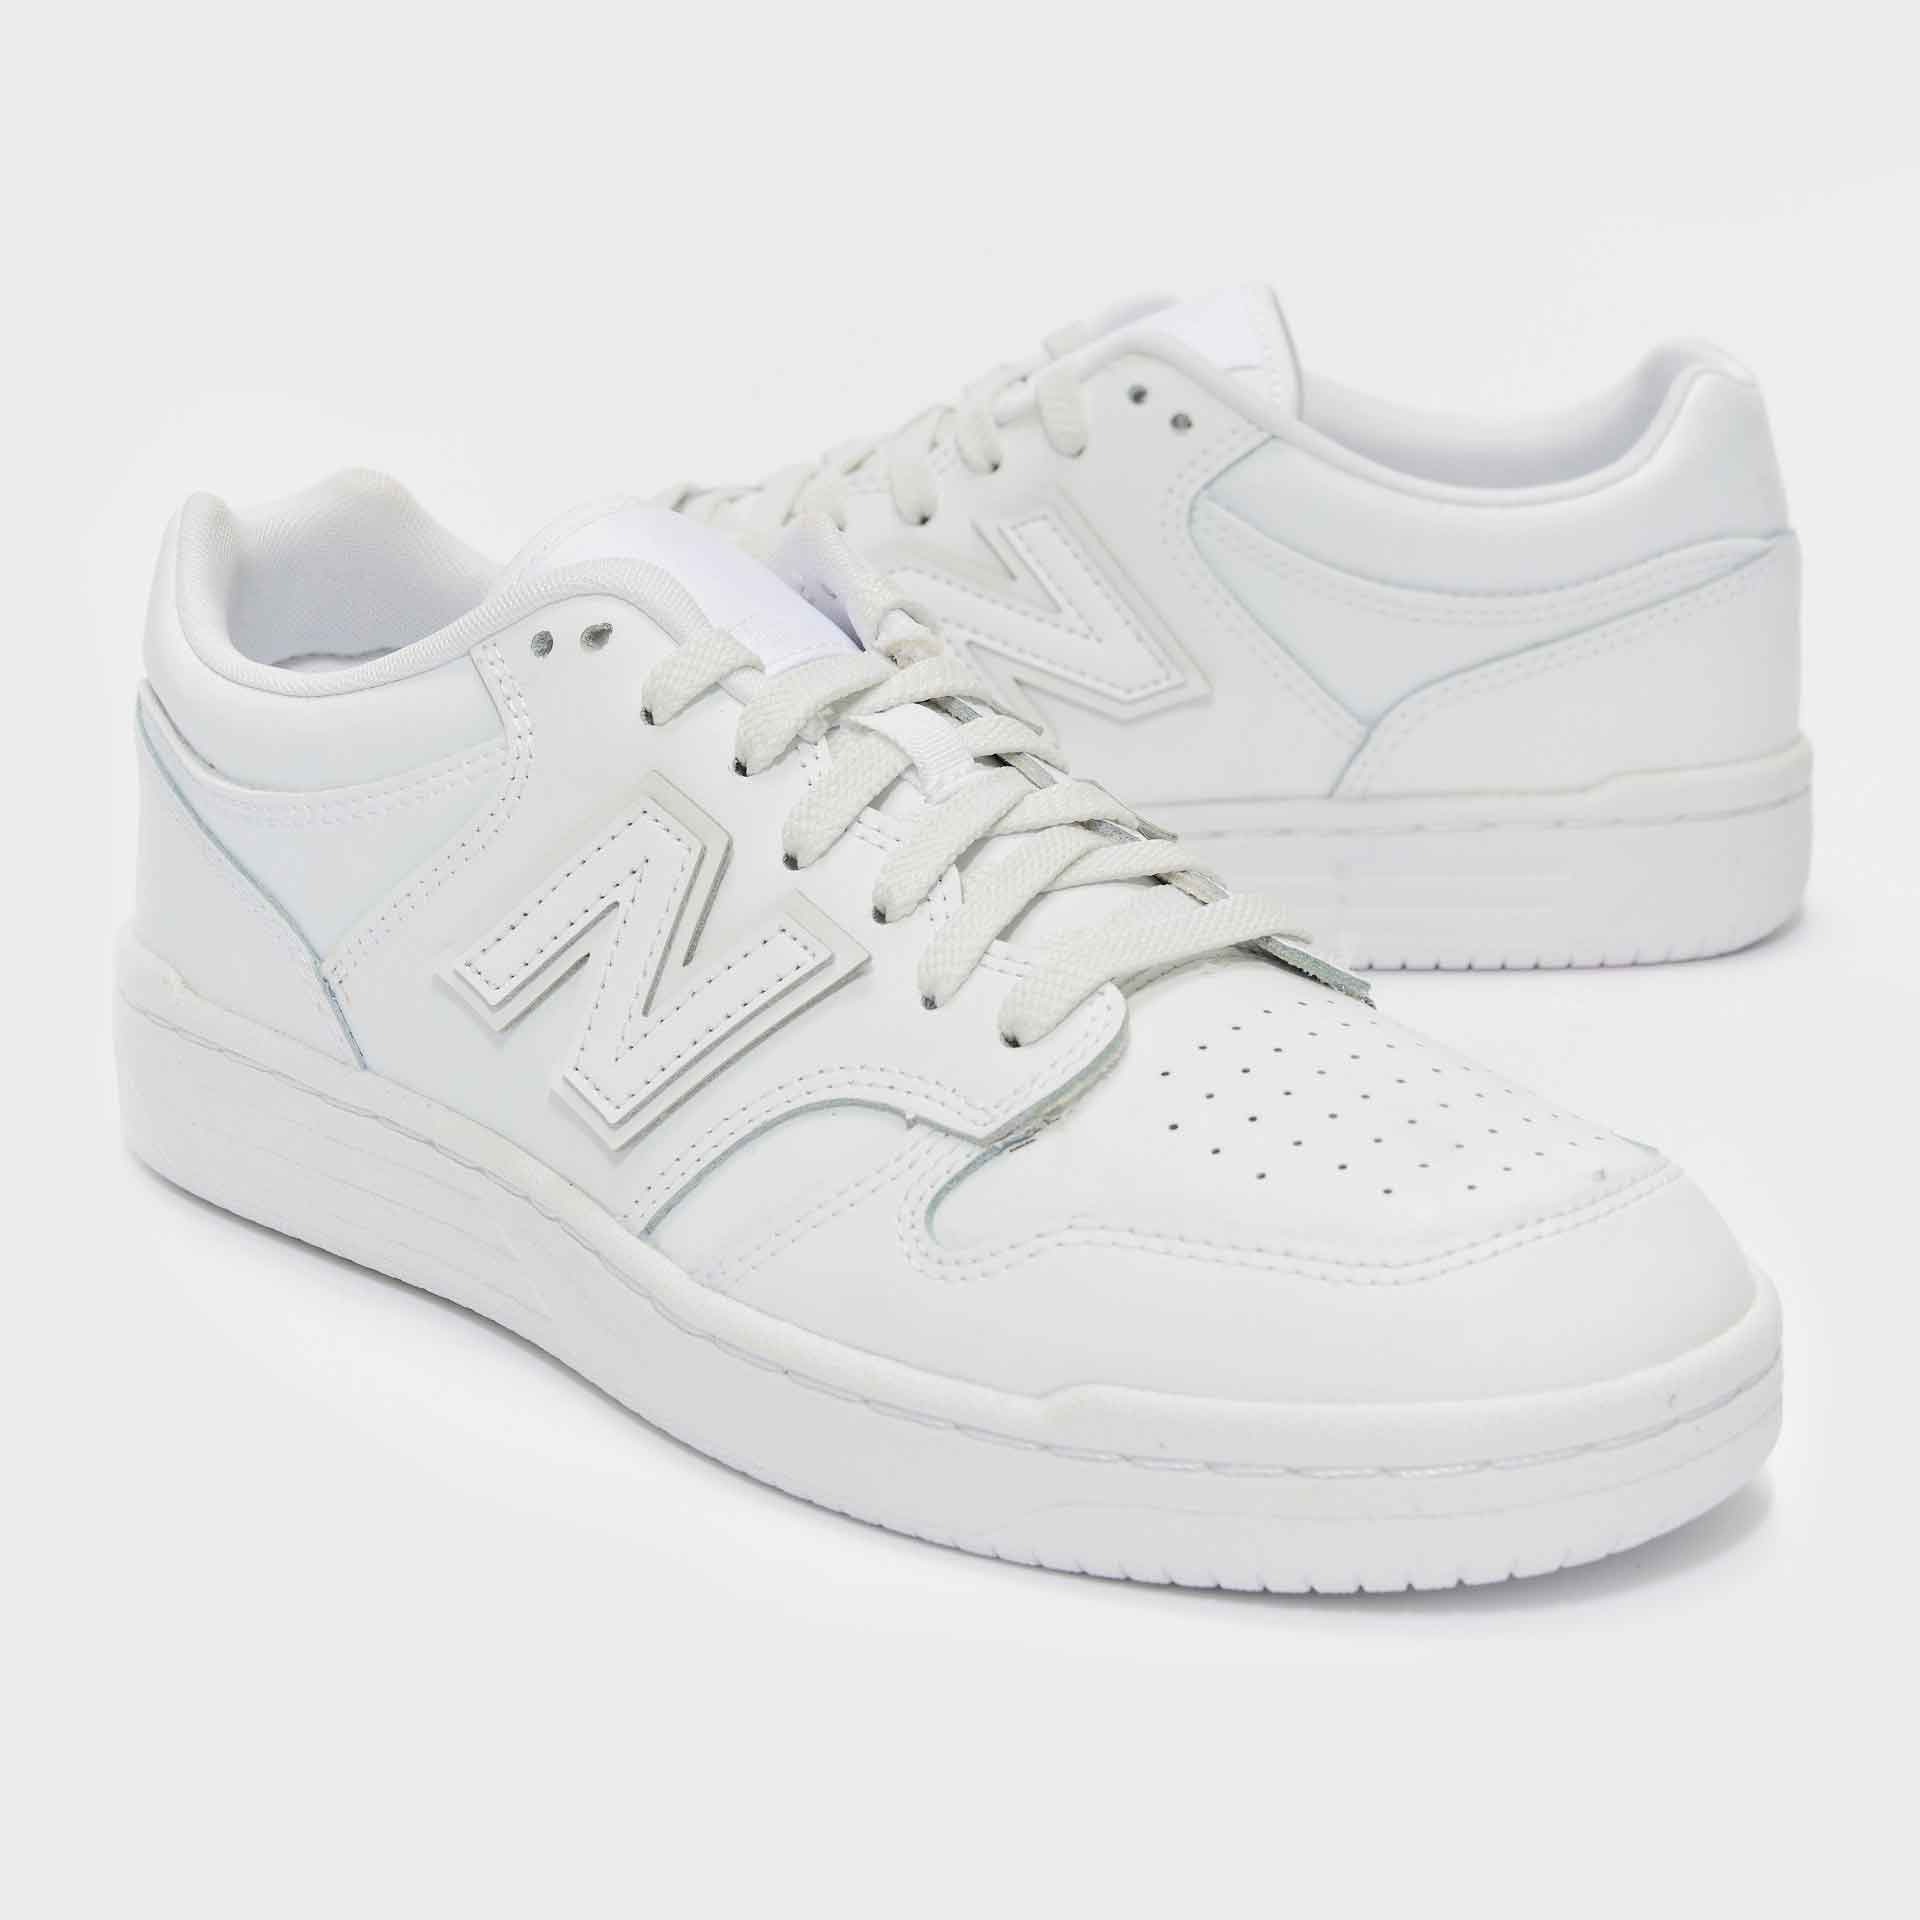 New Balance BB480 Sneaker White/White